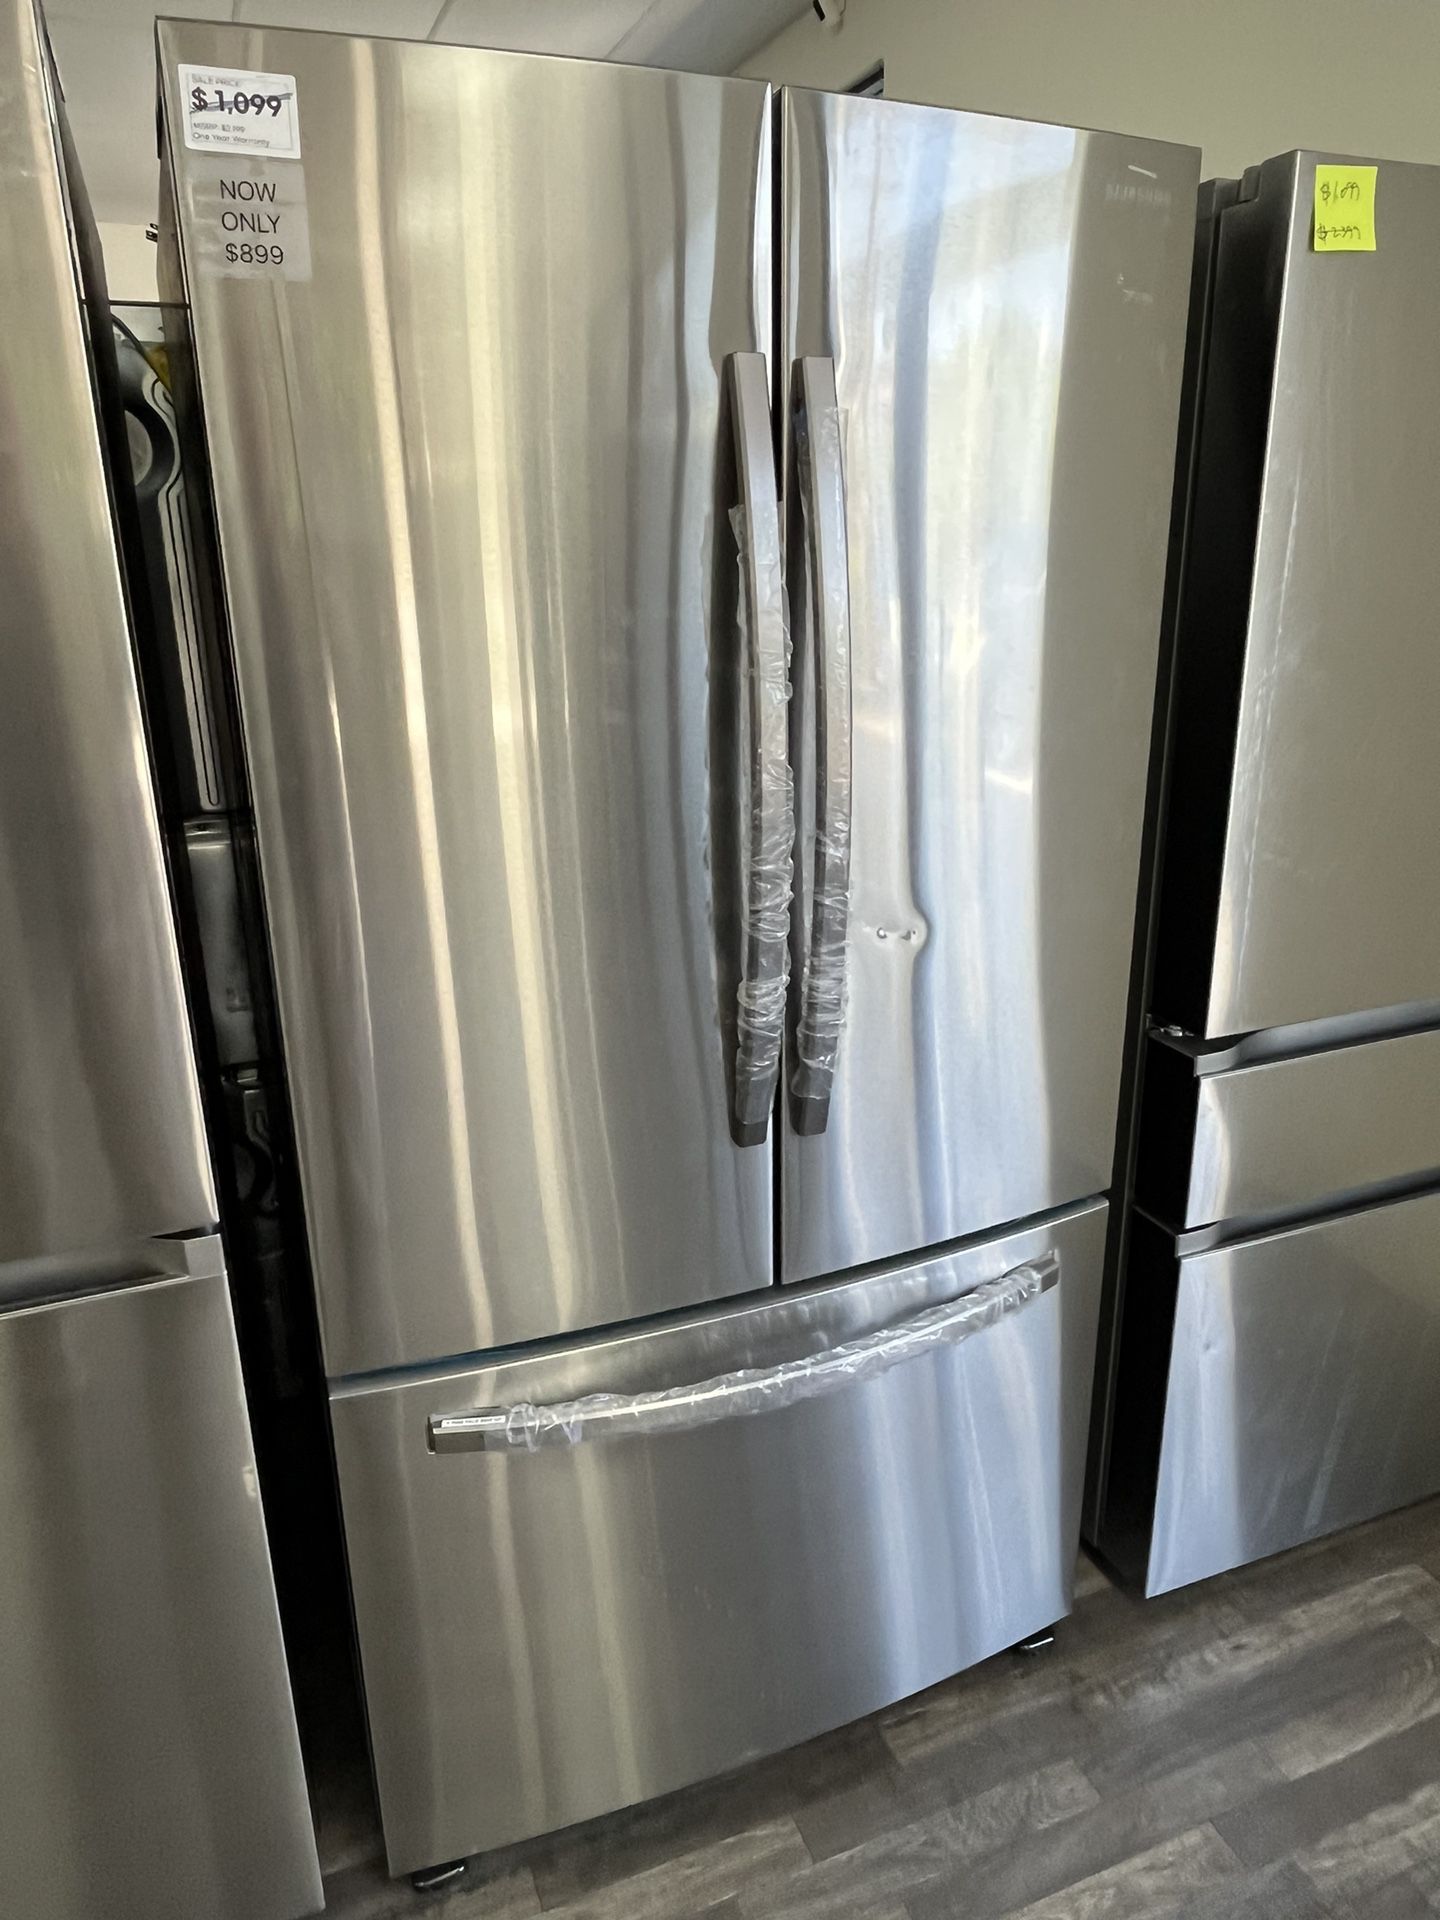 36”W Samsung Refrigerator ONLY $899